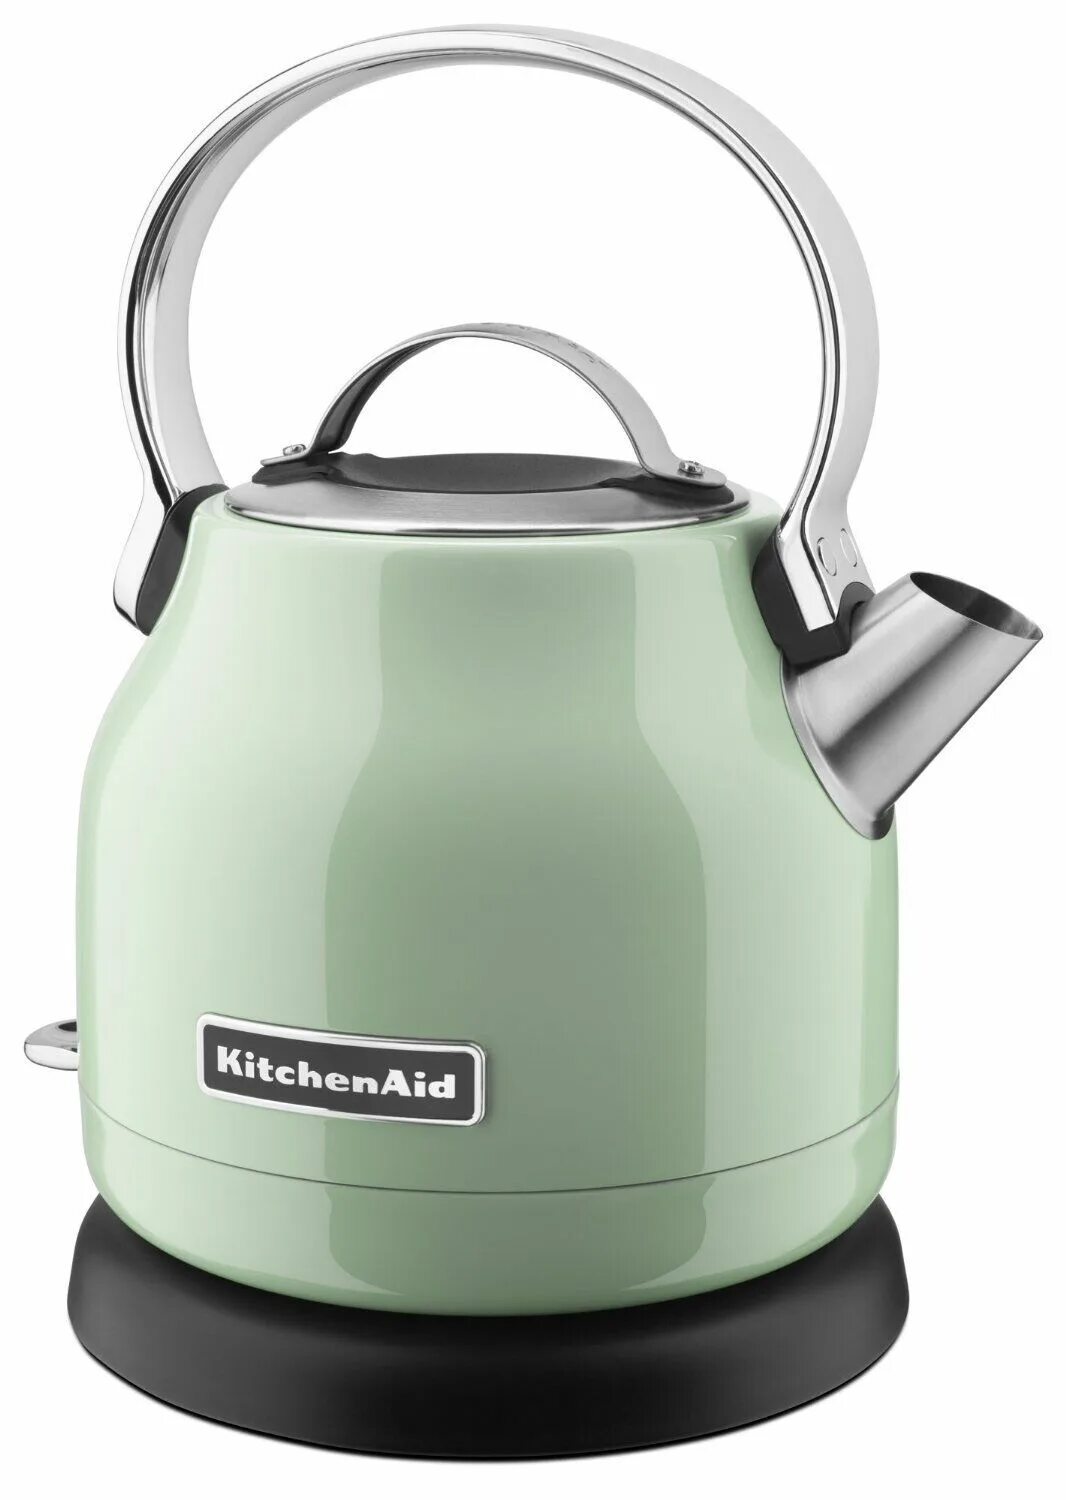 Чайник Electric kettle 1033d. Kitchenaid чайник зеленый. Китчен эйд чайник электрический. Электрический чайник КИТЧЕНАИД. Kettle 1a